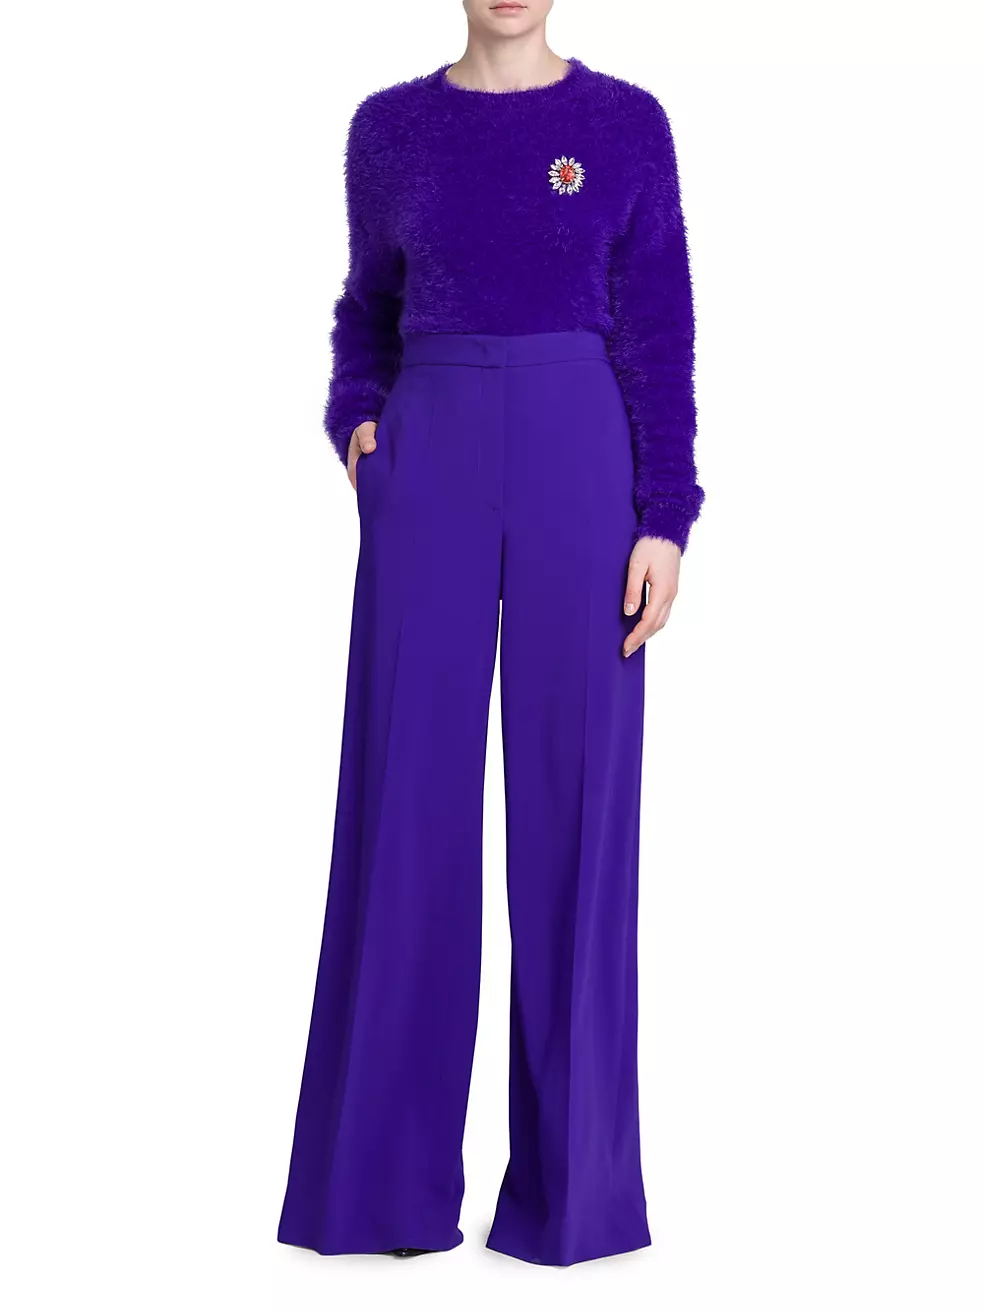 MOSCHINO JEANS TROUSERS - Cargo trousers - violet/purple - Zalando